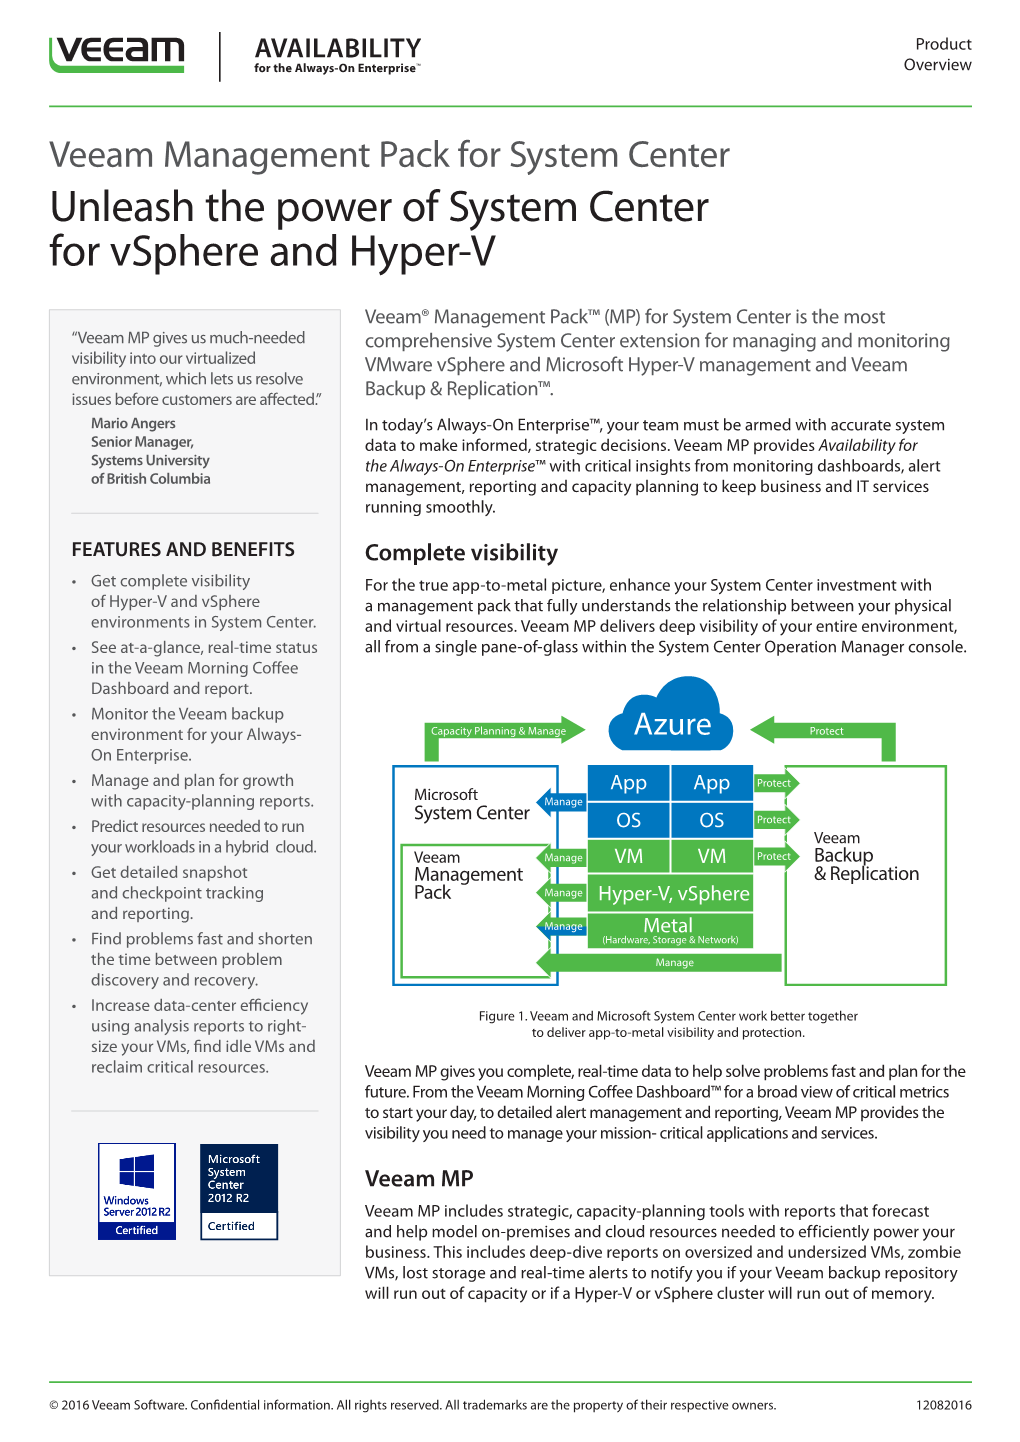 Unleash the Power of System Center for Vsphere and Hyper-V